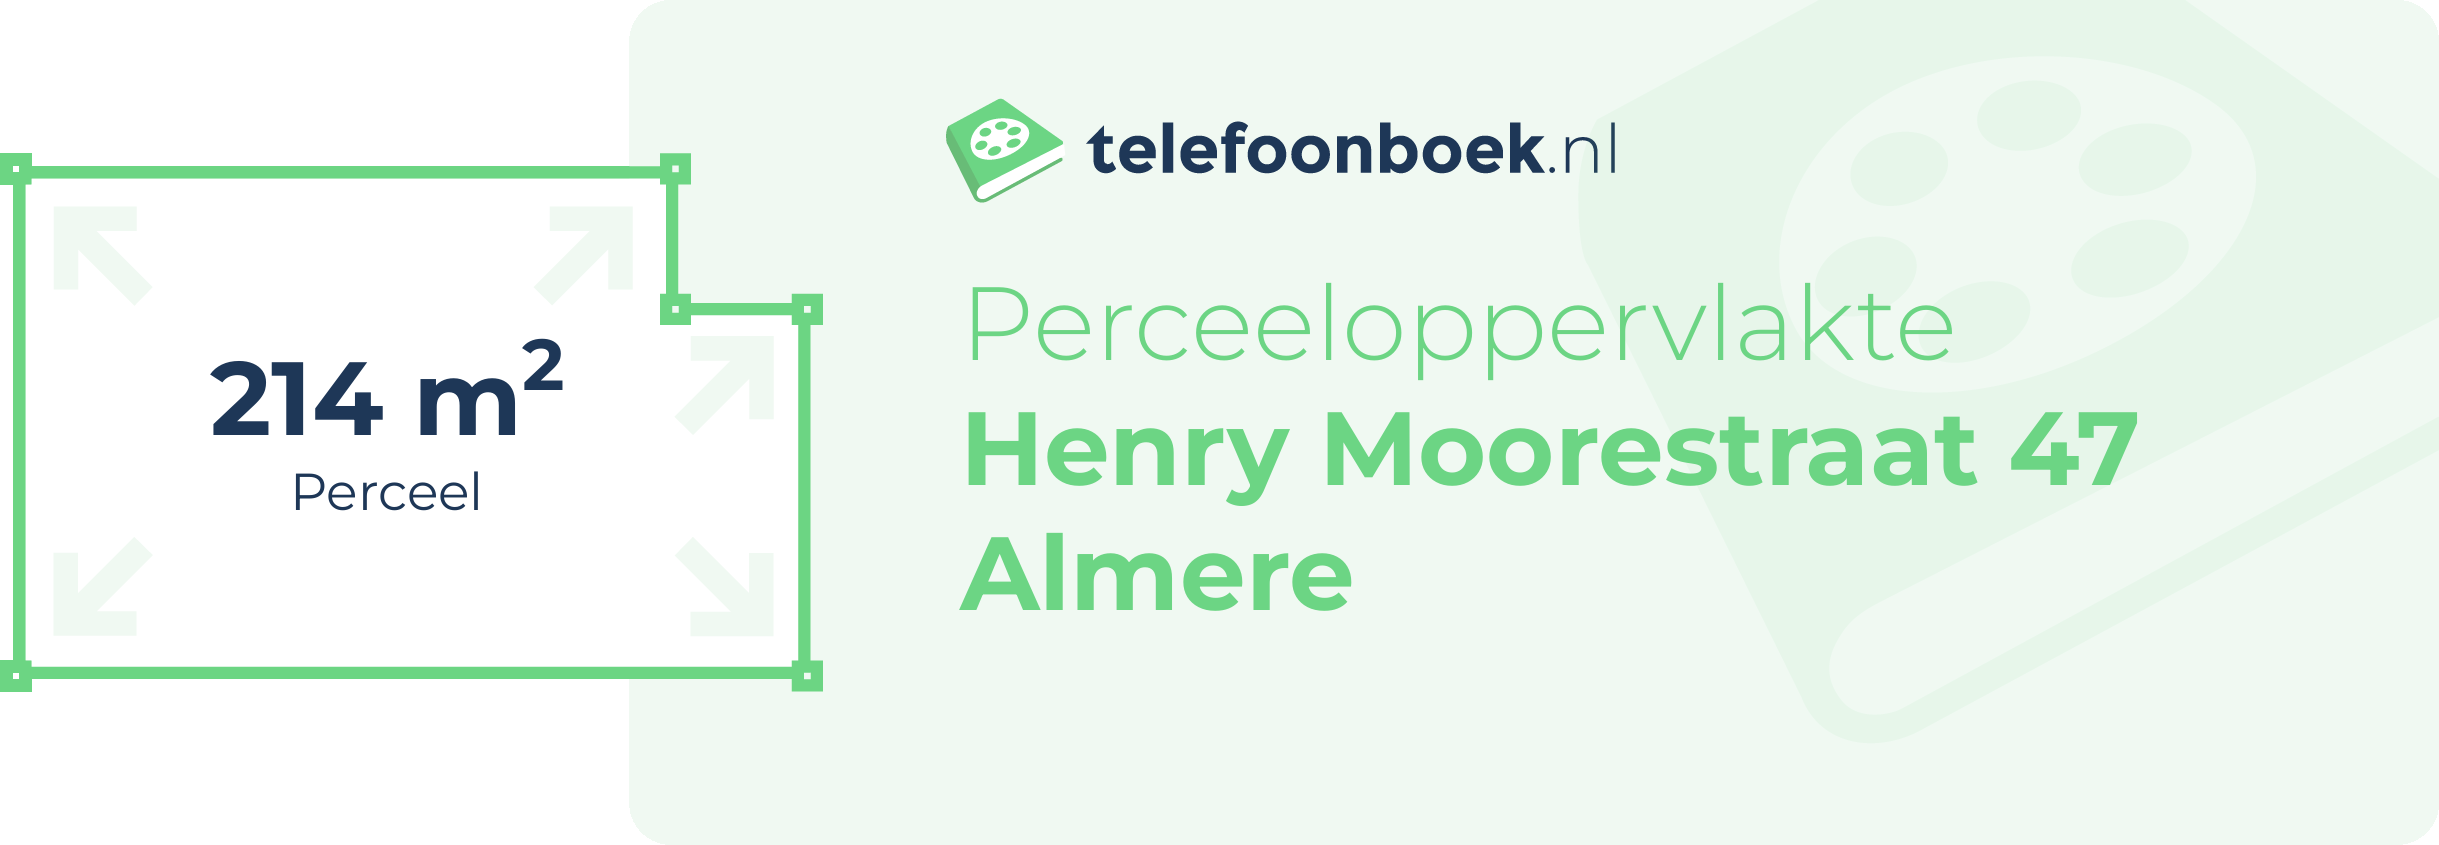 Perceeloppervlakte Henry Moorestraat 47 Almere